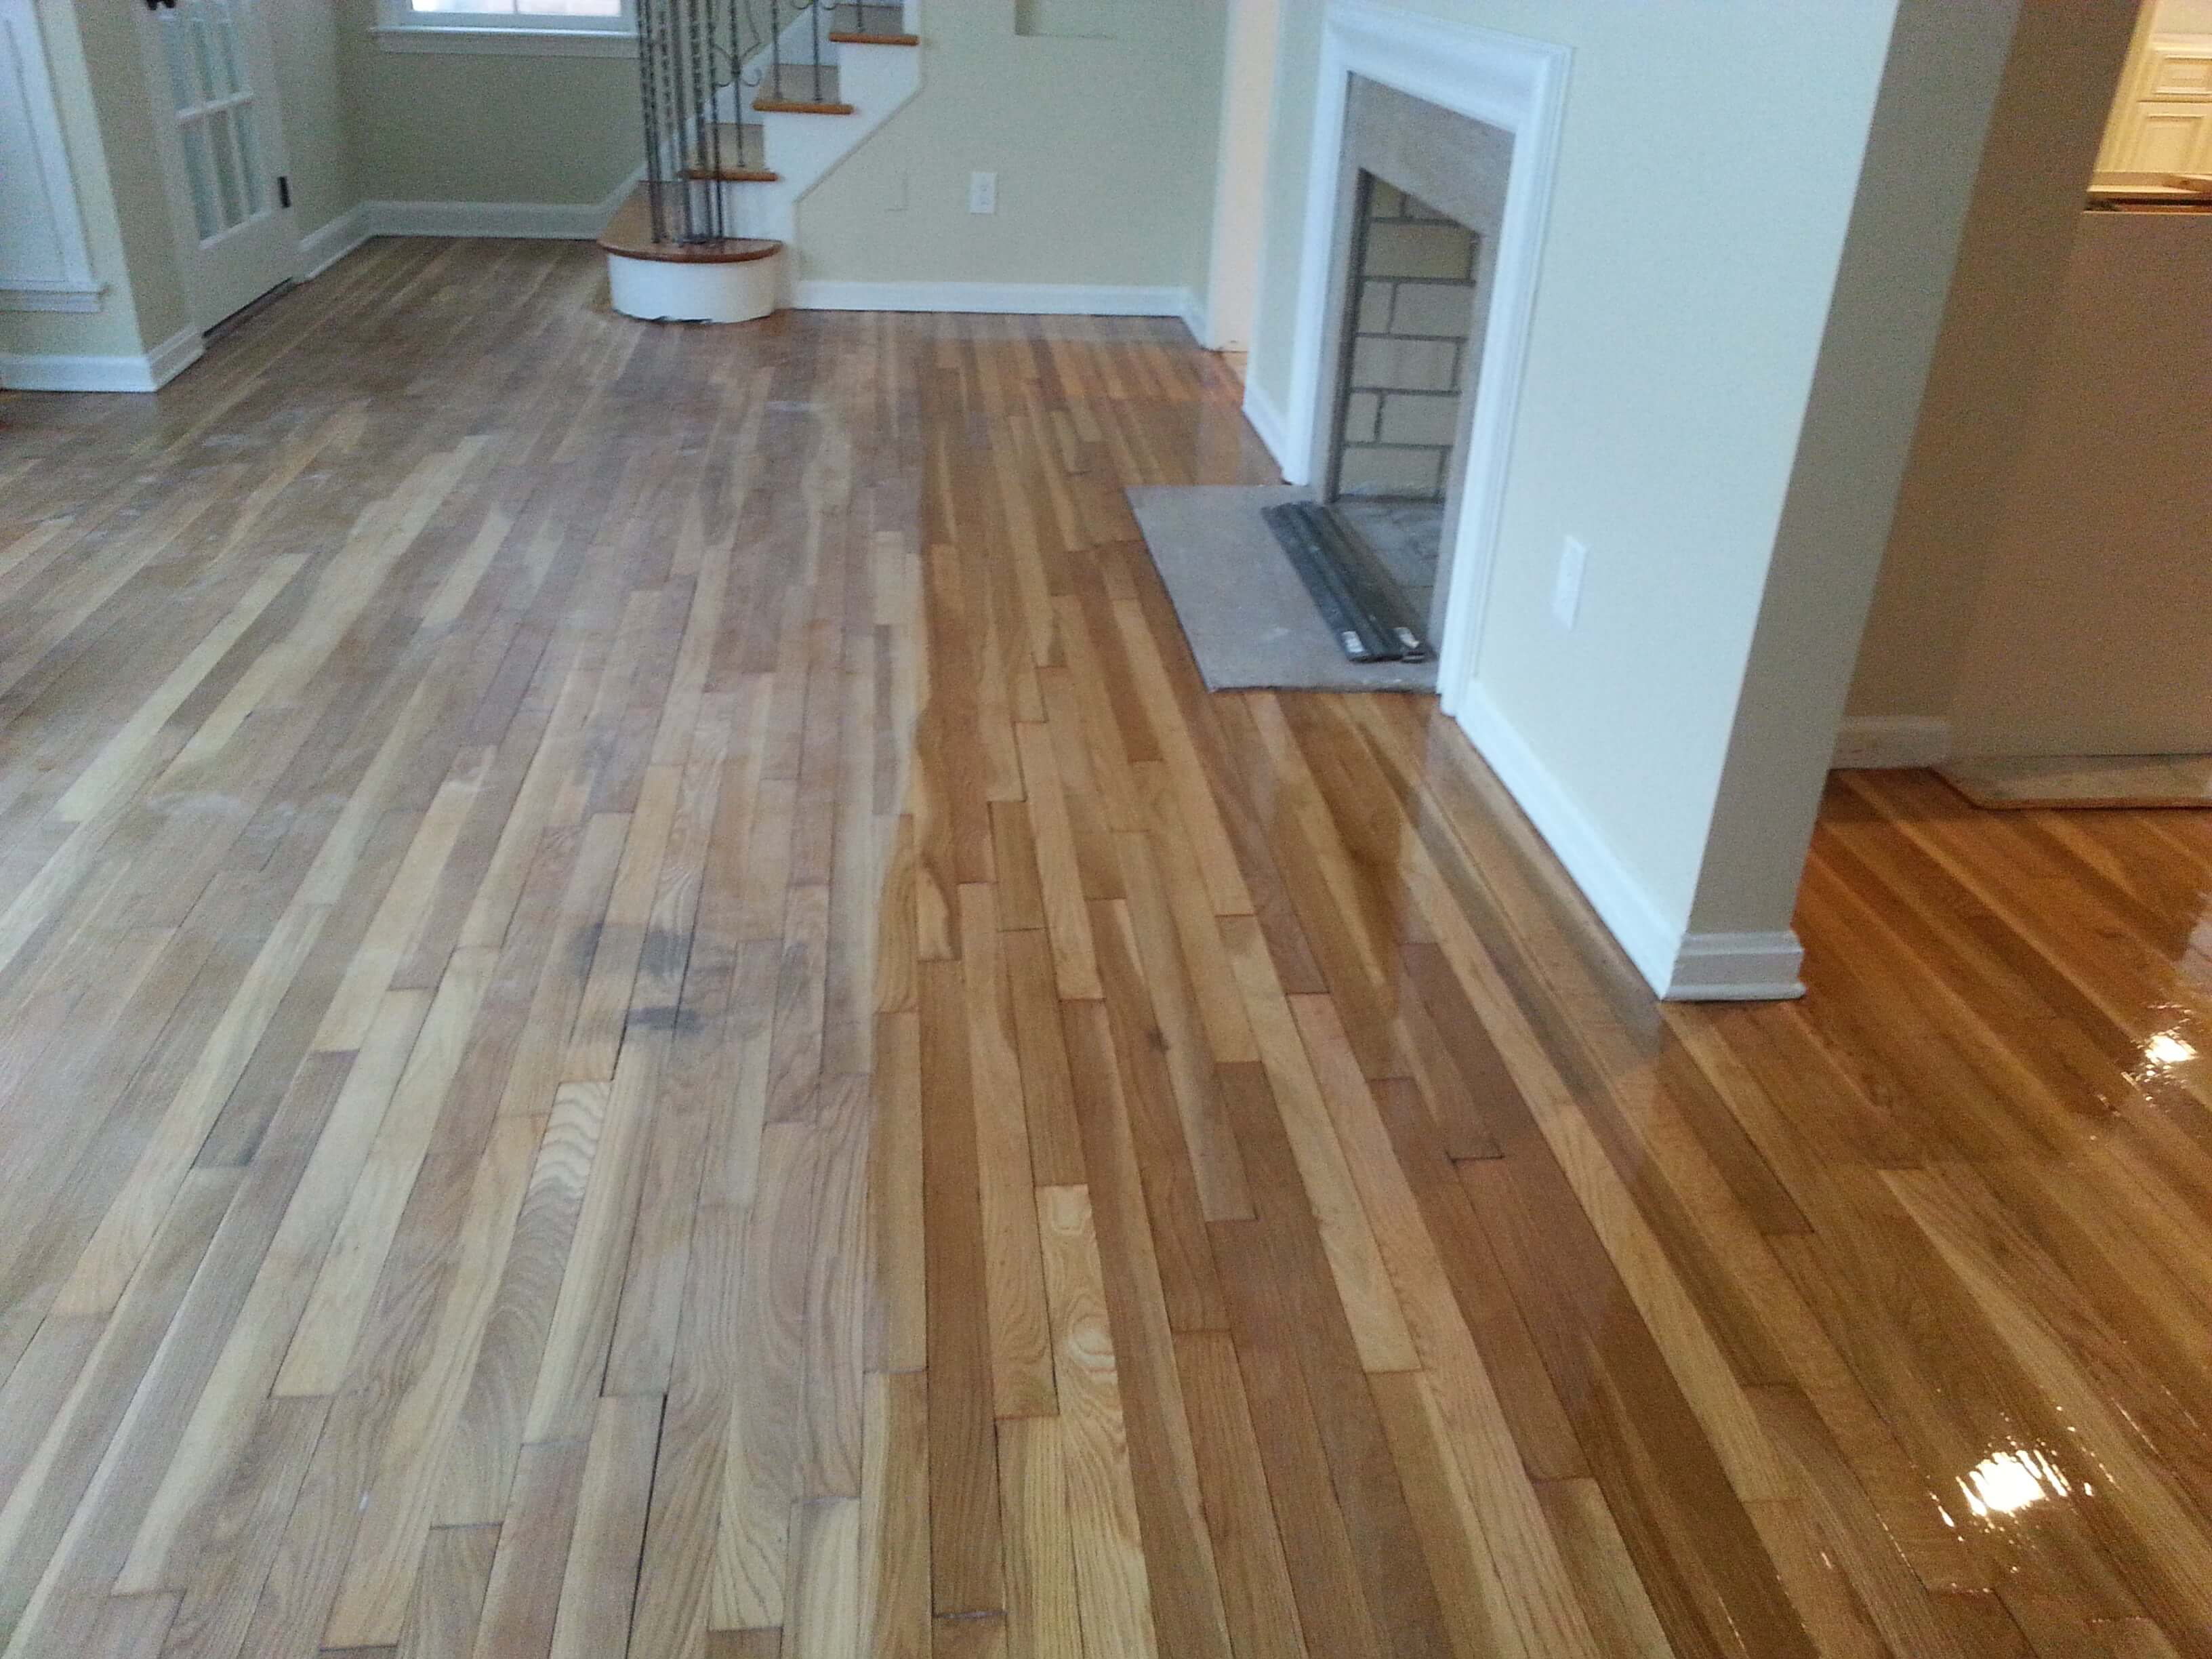 Hardwood Floor Resurfacing Bandera Tx, Labor Cost To Refinish Hardwood Floors